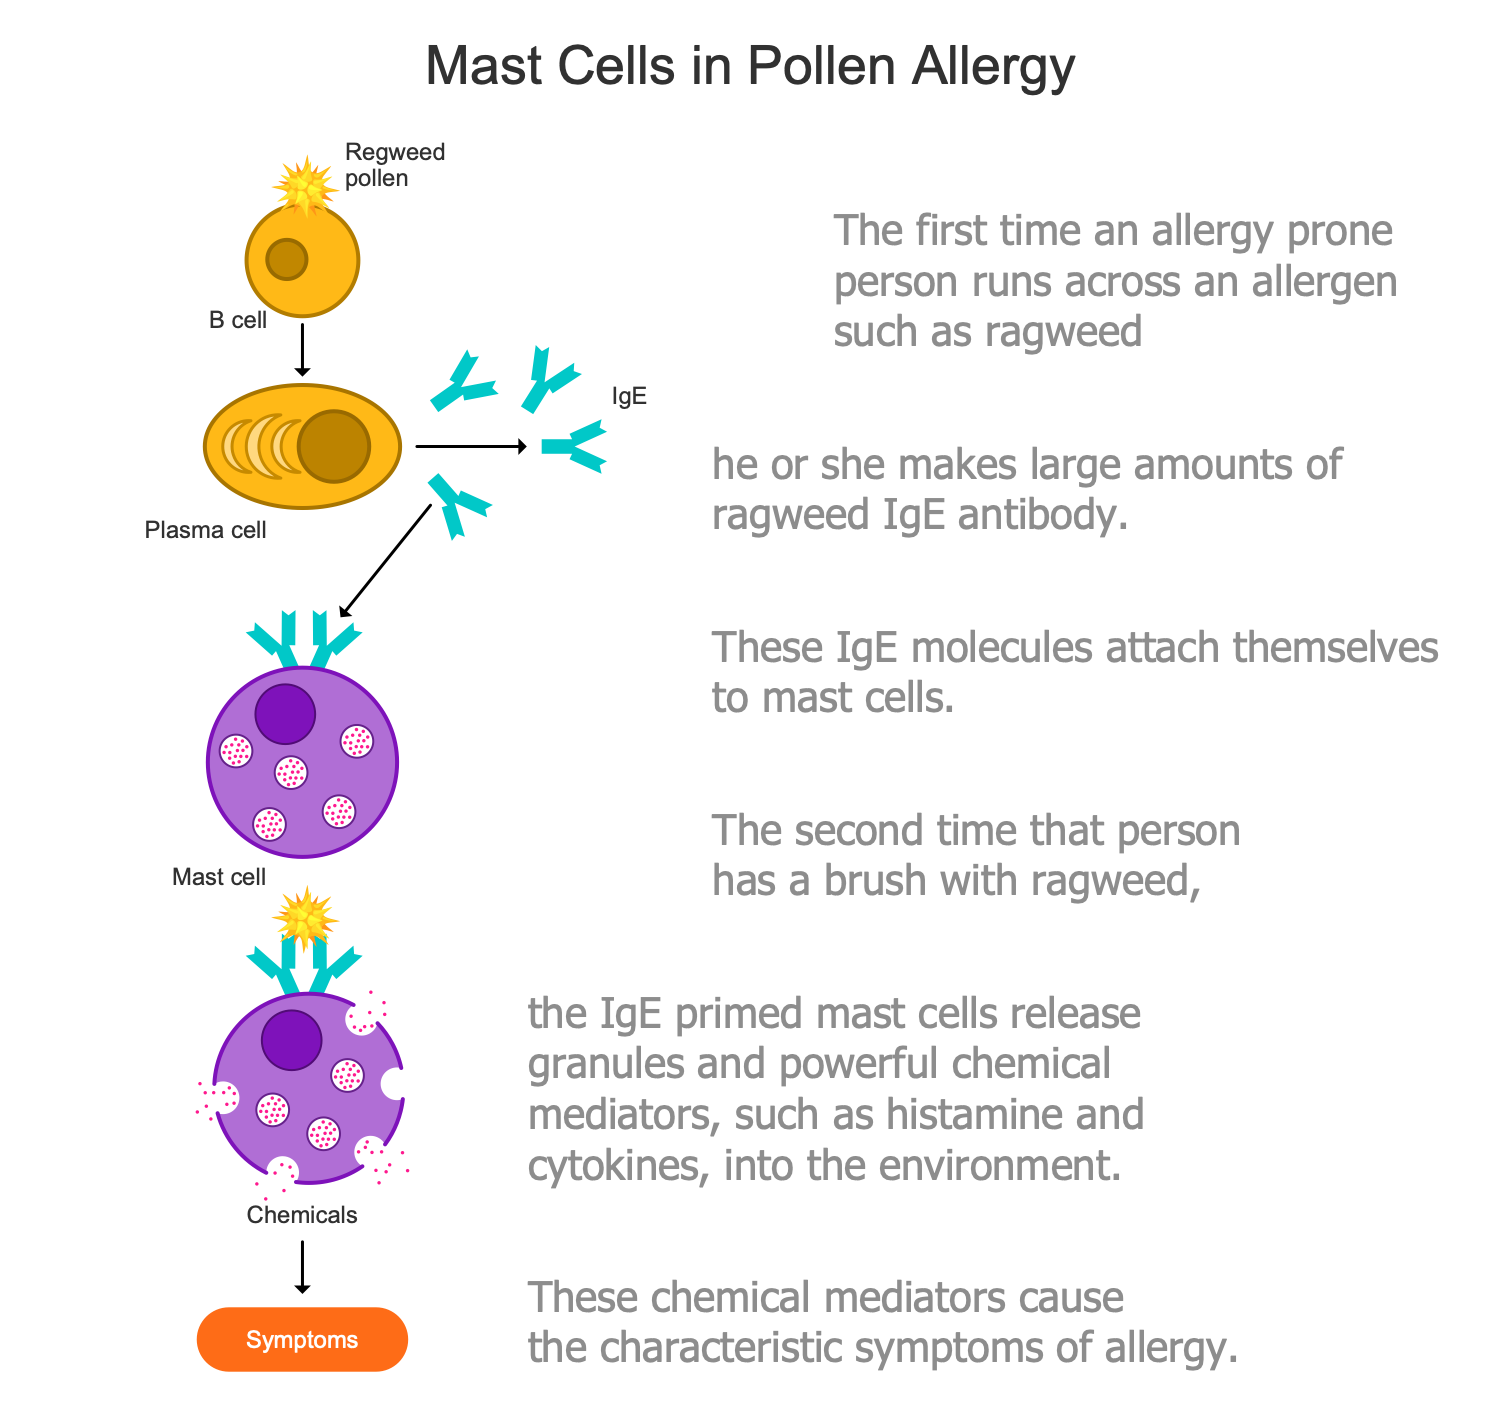 Mast Cells in Pollen Allergy